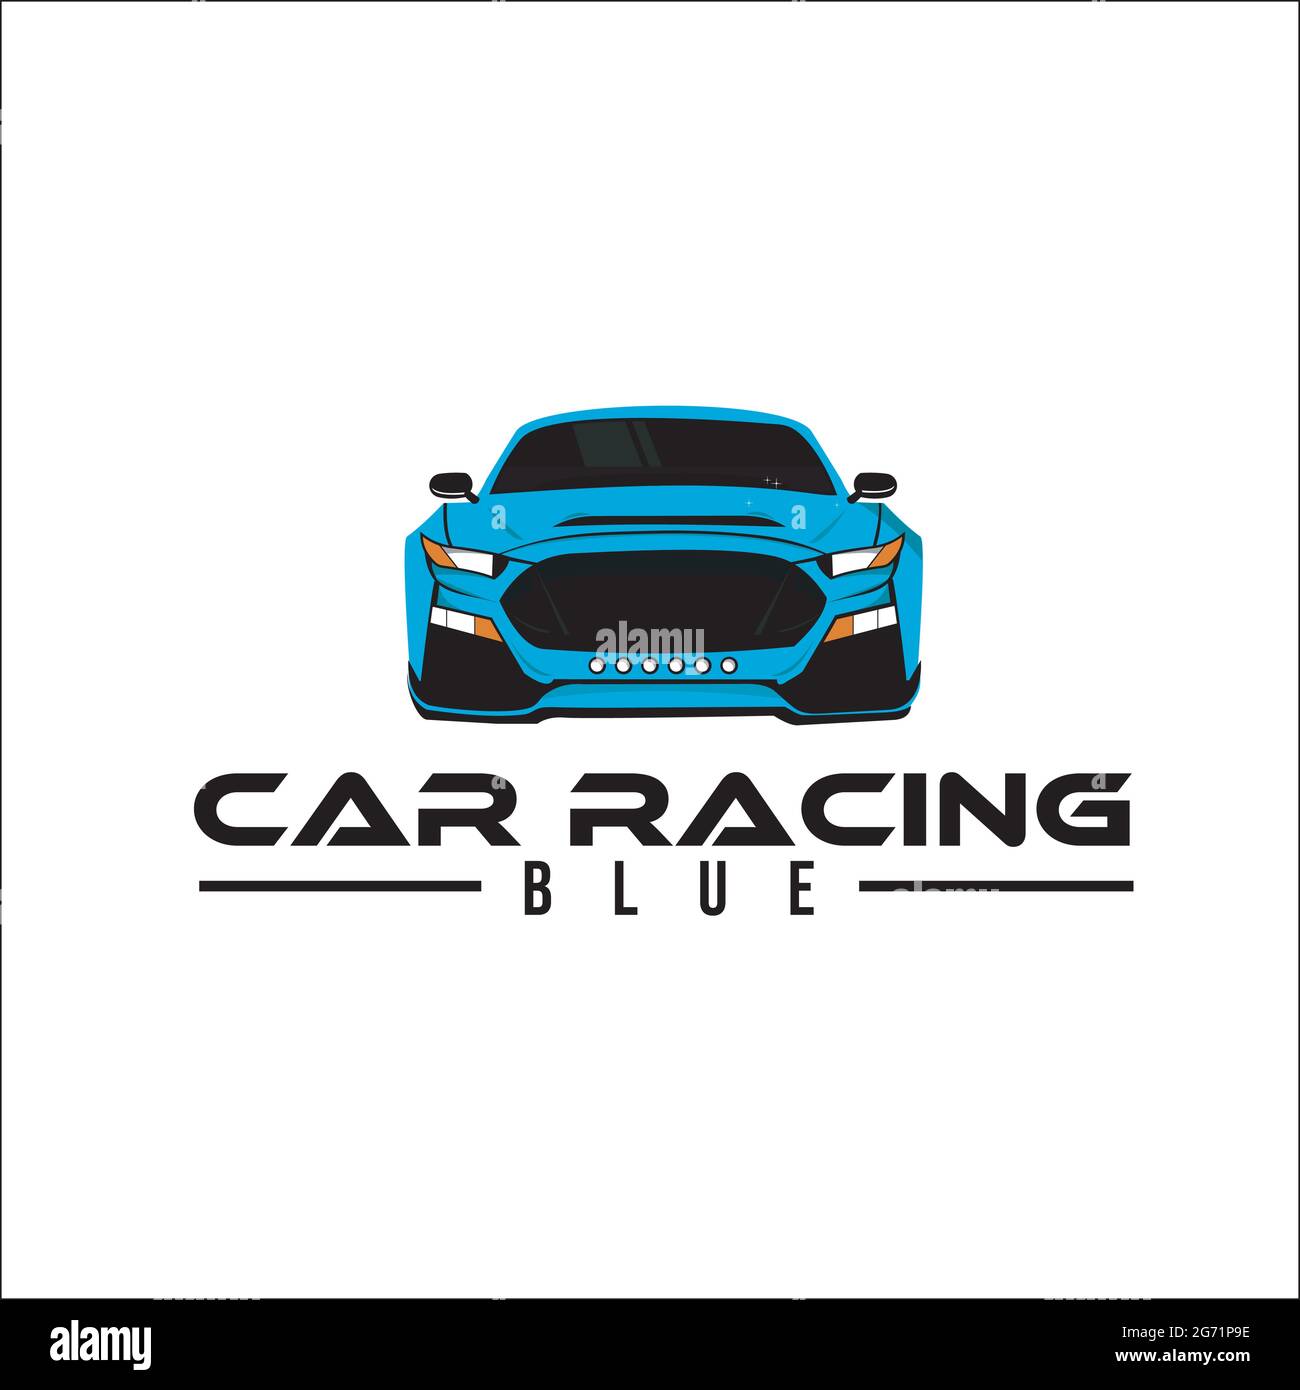 car racing blue exclusive design logo inspiration Stock Vector